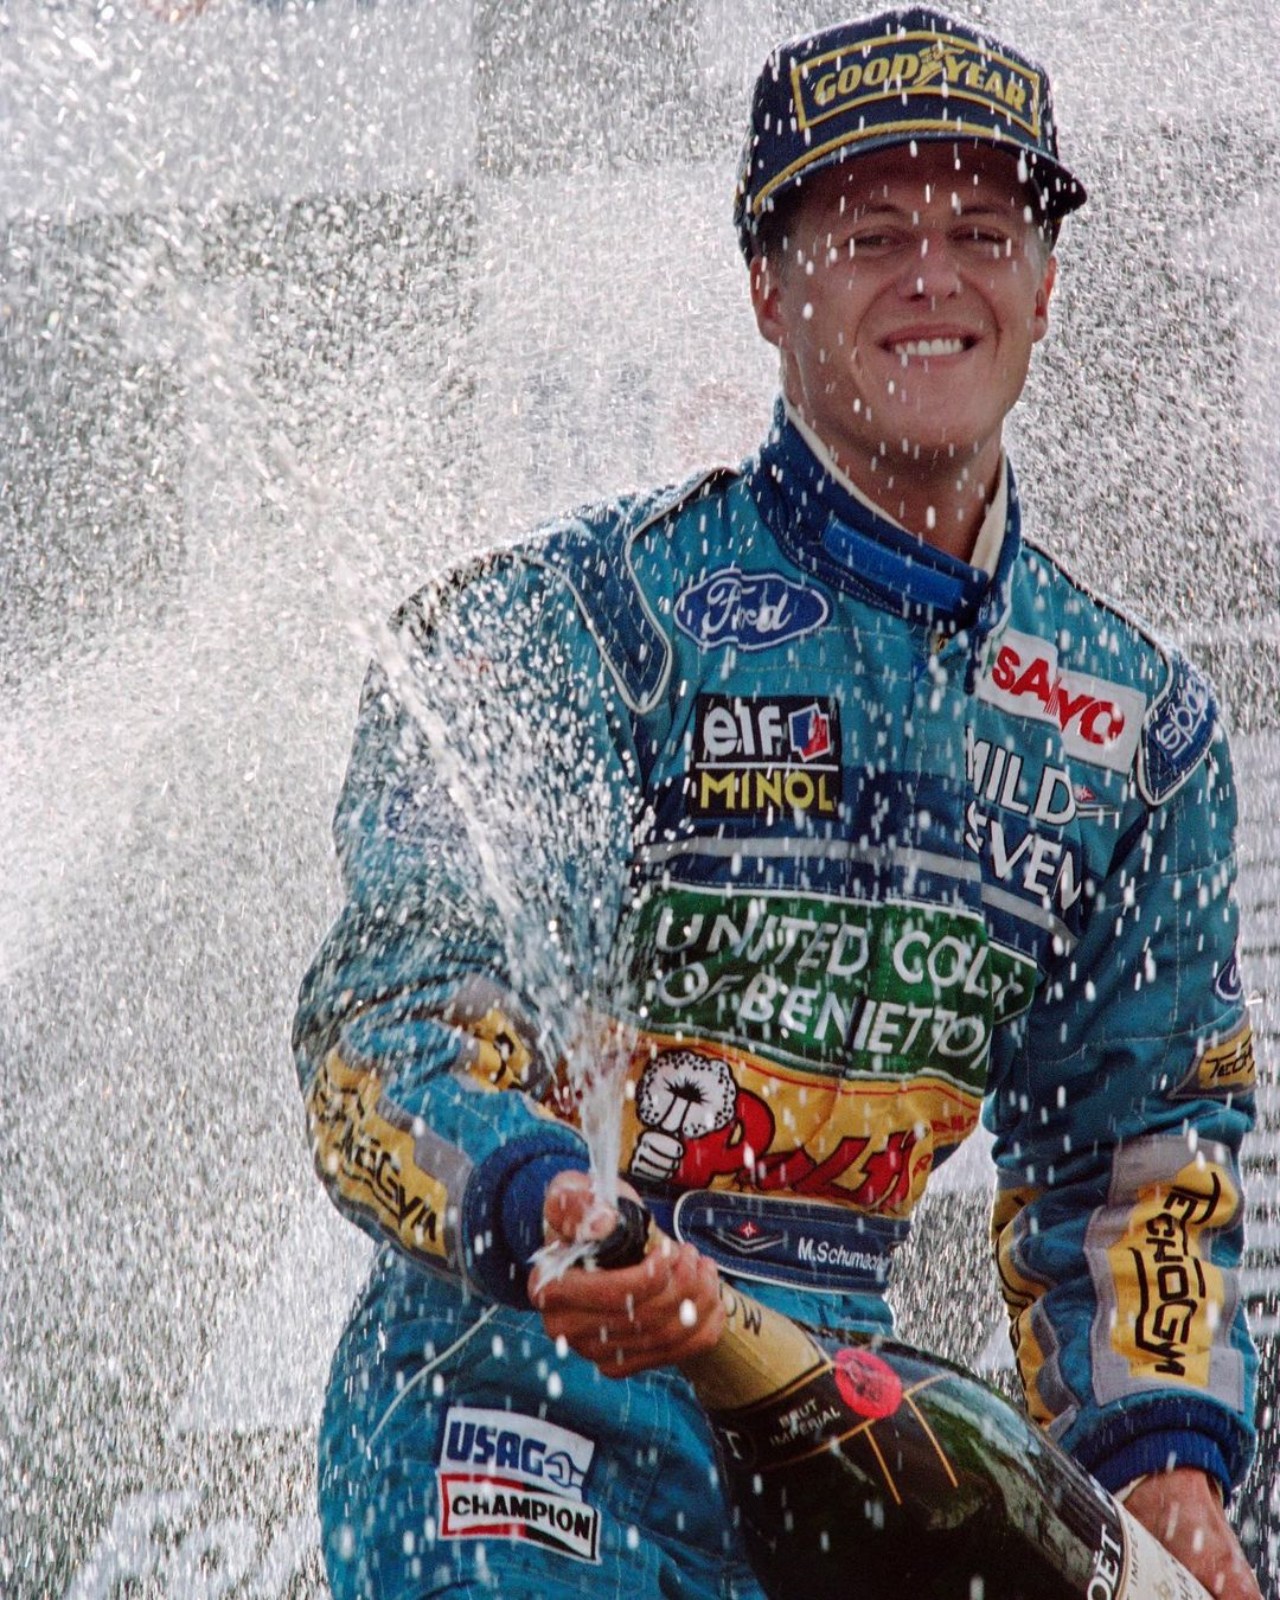 Michael Schumacher highest earning formula one racing driver